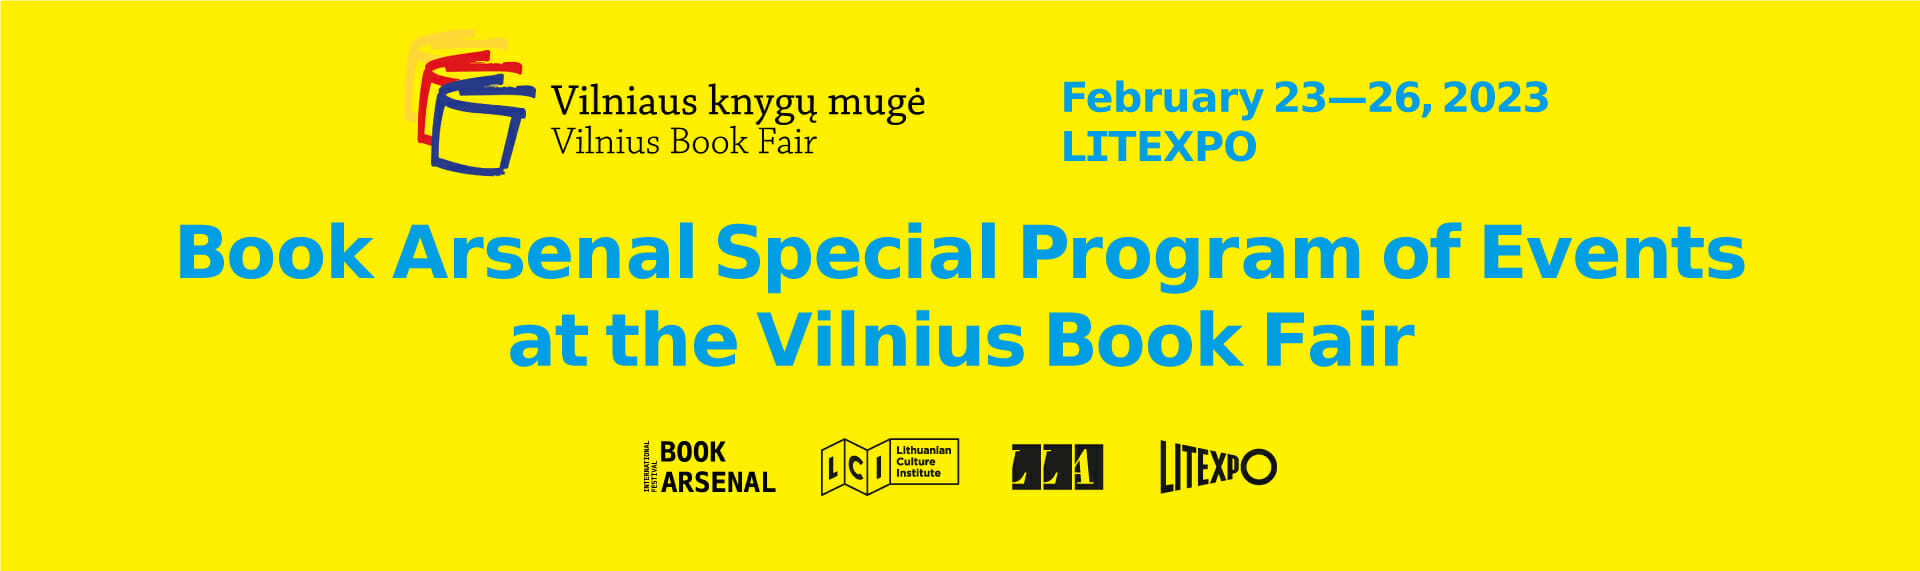 Special Program of Events at the Vilnius Book Fair